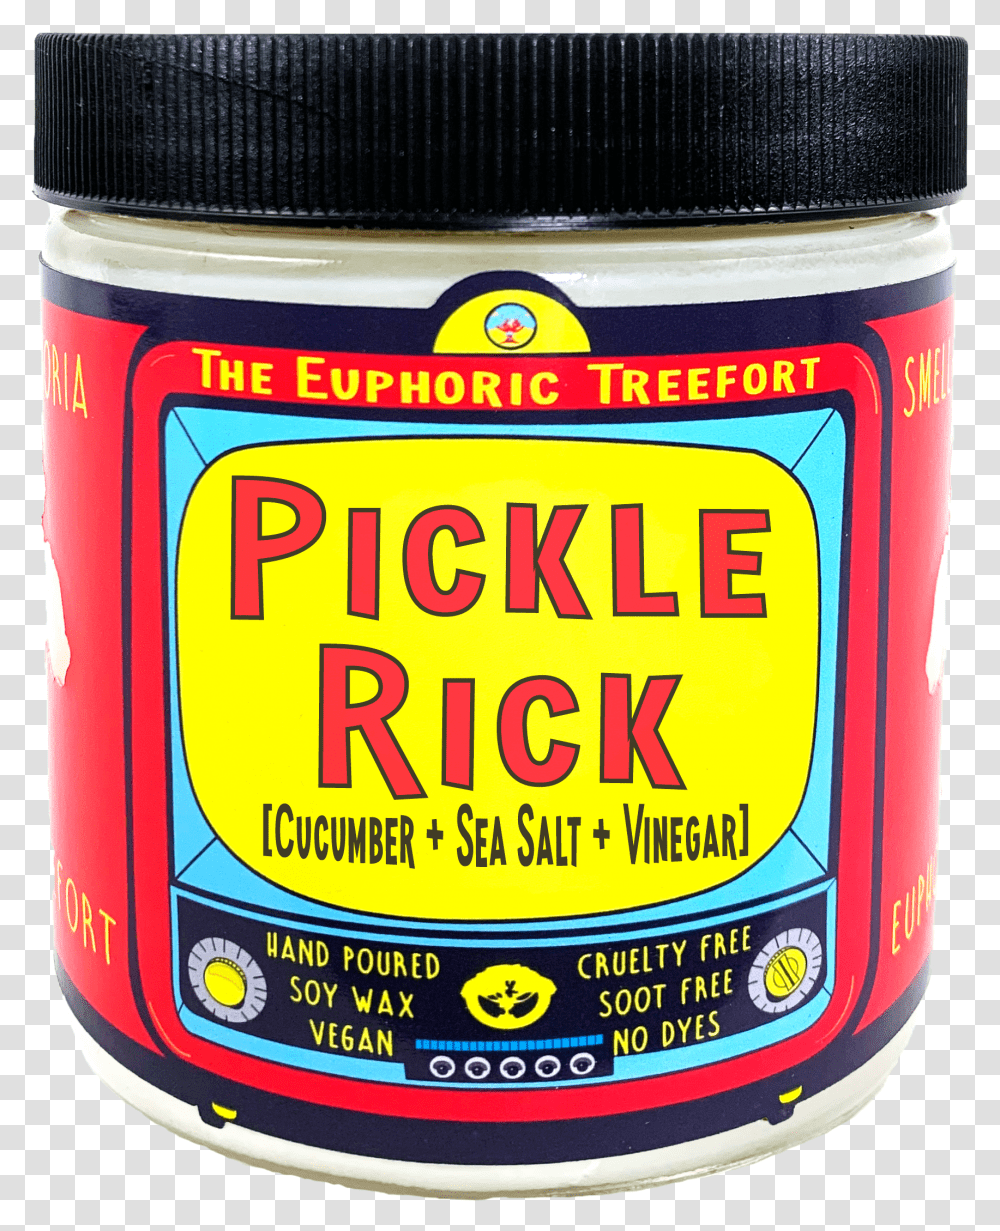 Pickle Rick Product Label Transparent Png